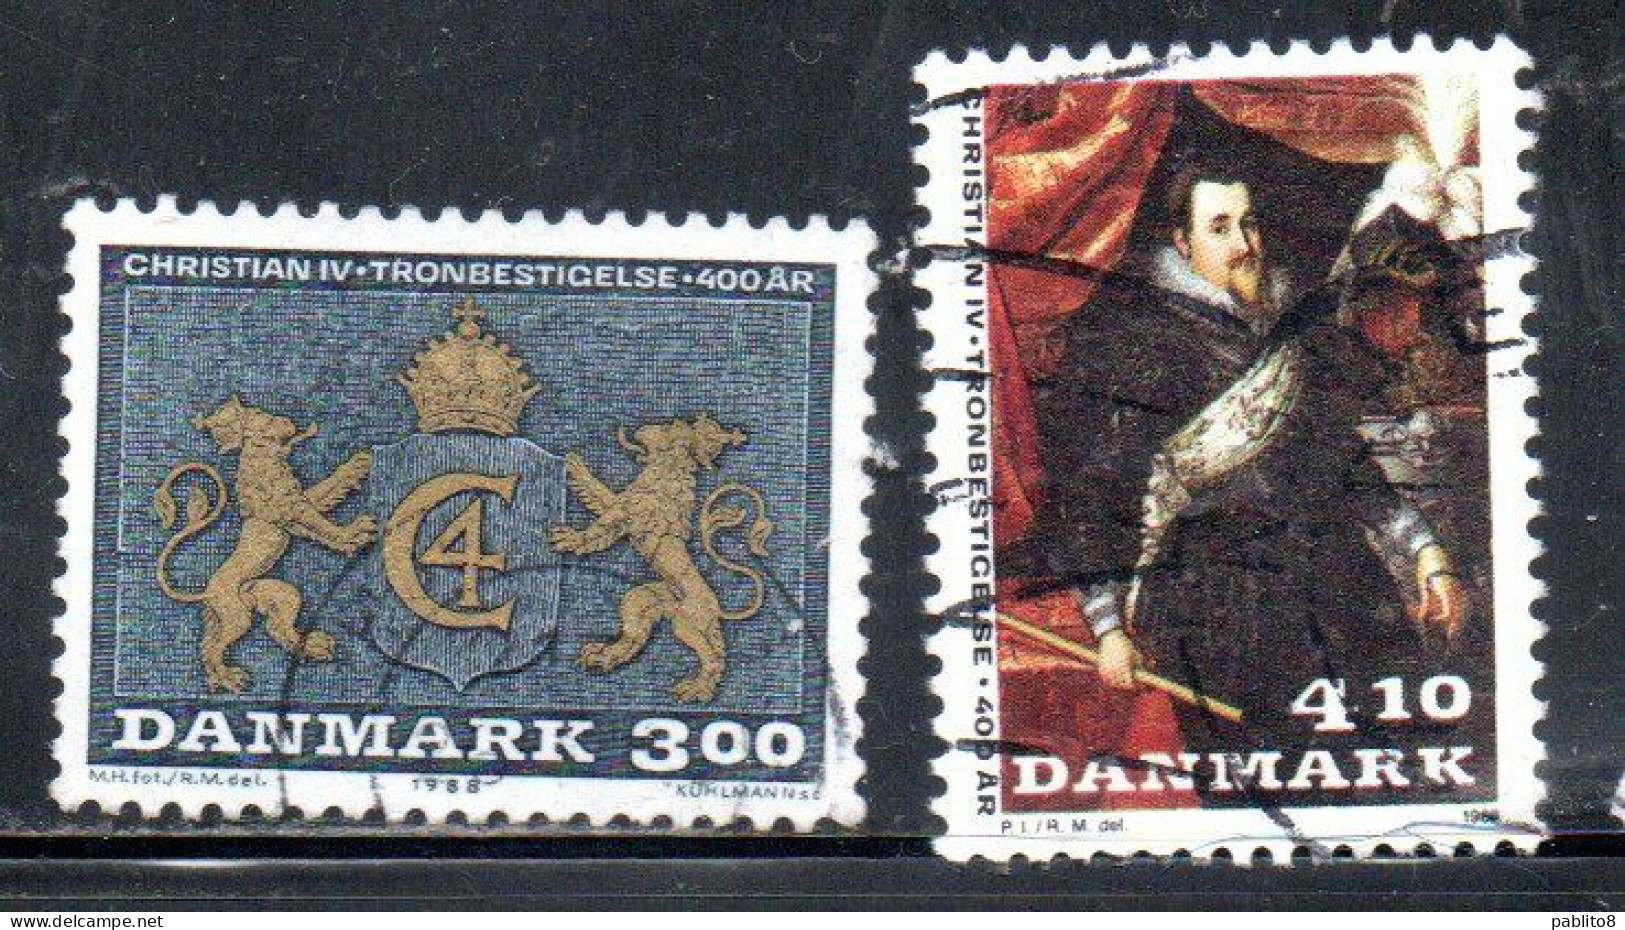 DANEMARK DANMARK DENMARK DANIMARCA 1988 ACCESSION OF CHRISTIAN IV KING OF DENMARK AND NORWAY SET USED USATO OBLITERE' - Used Stamps